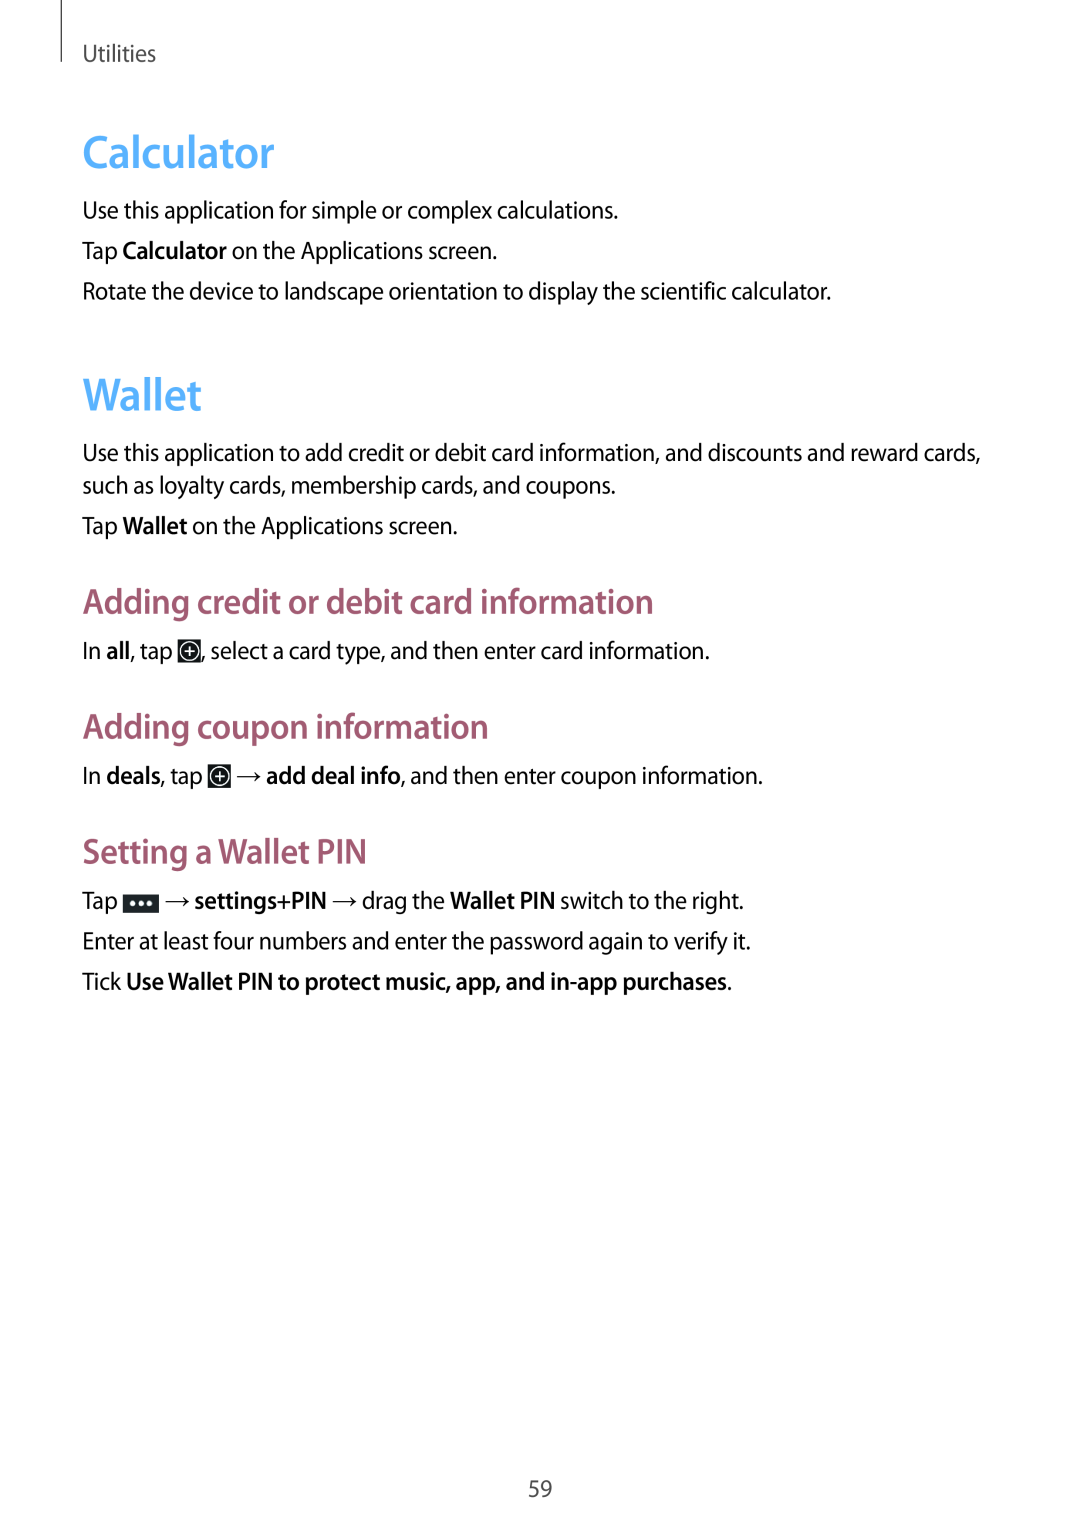 Samsung GT-I8750ALASER Calculator, Wallet, Adding credit or debit card information, Adding coupon information, Utilities 